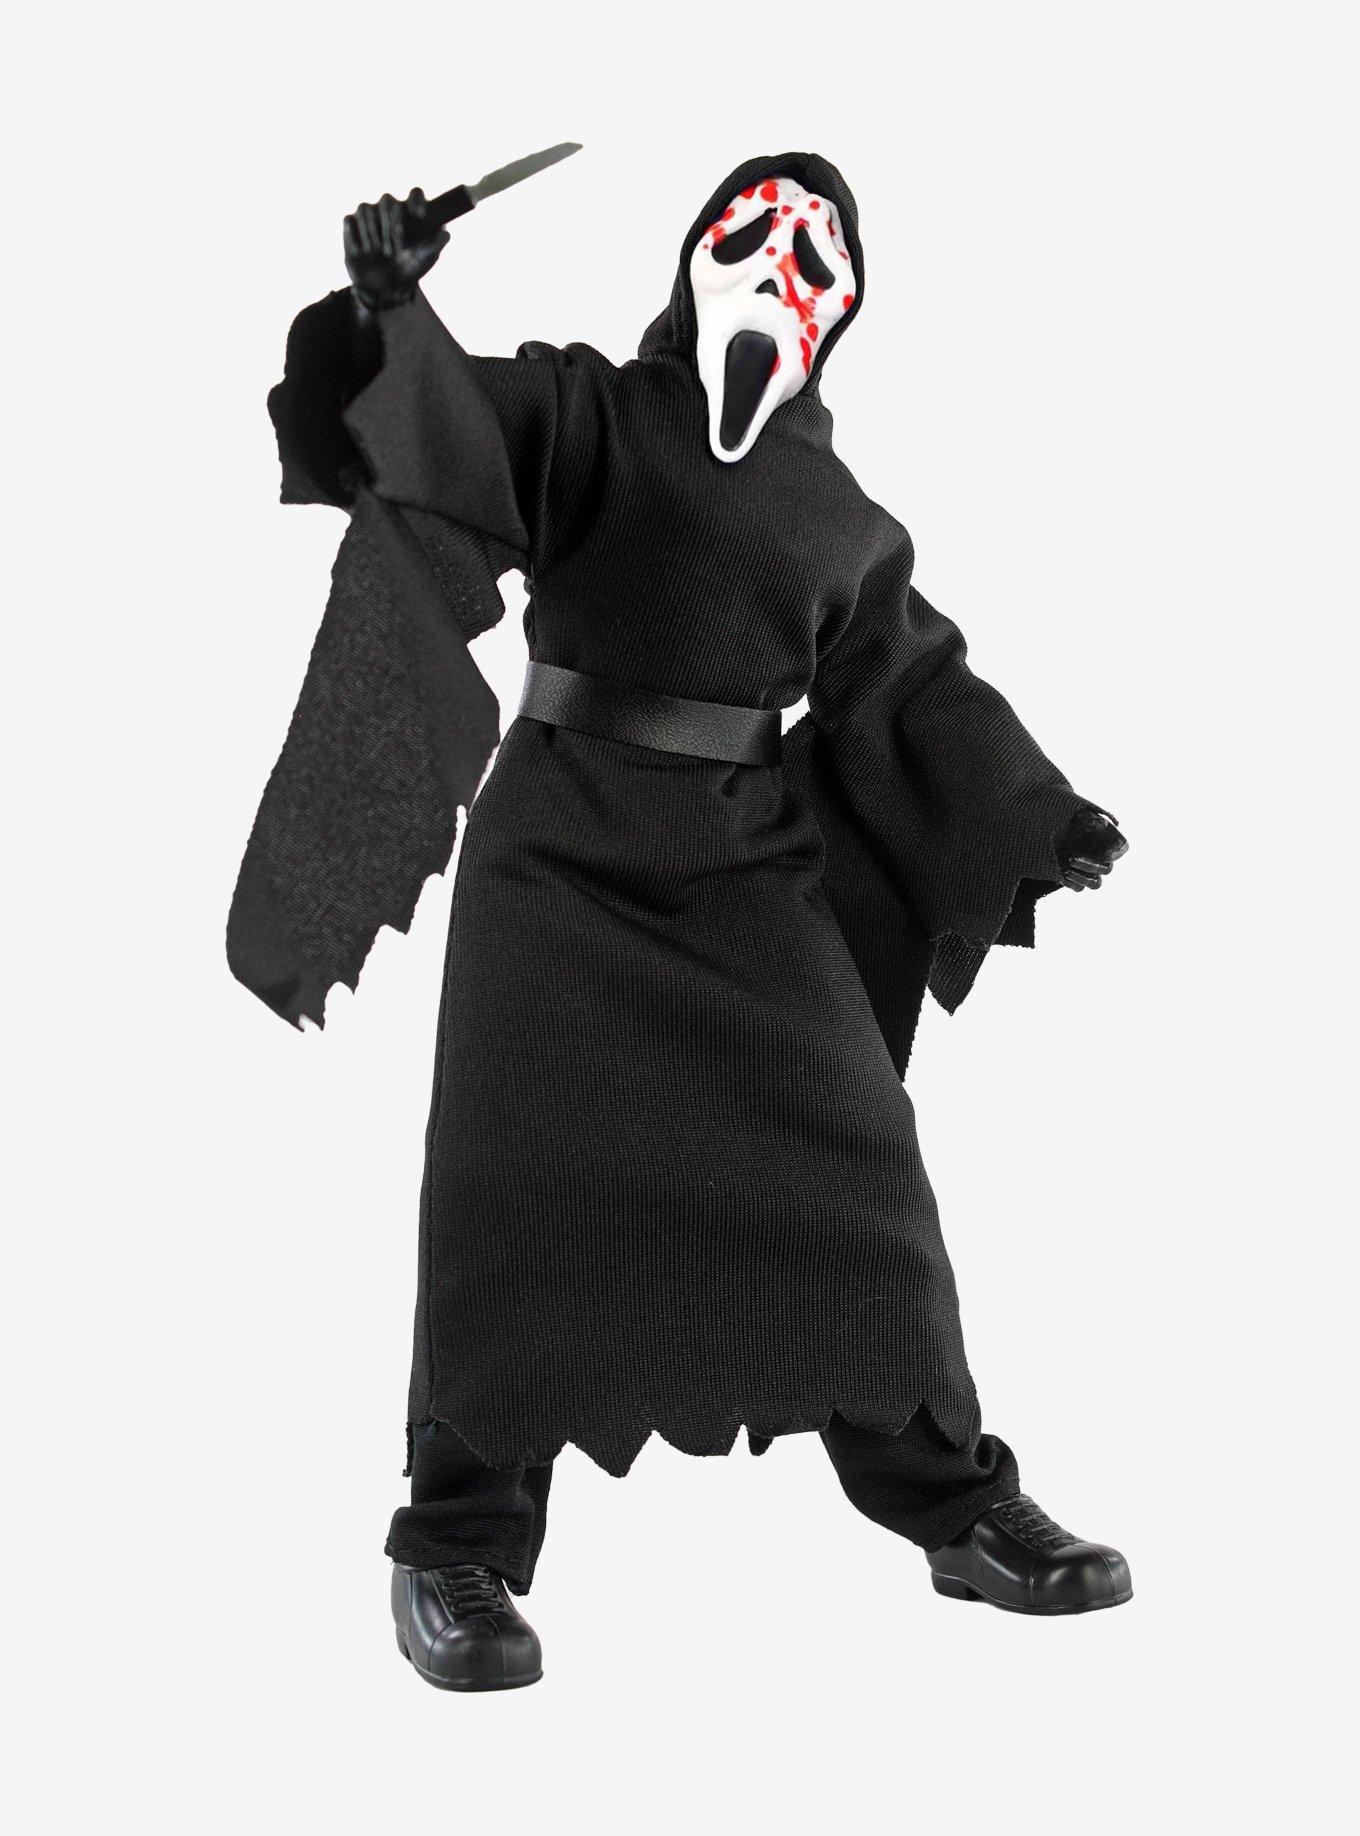 Scream Boys Bleeding Ghost Face Scary Halloween Costume, Fun World, Size M